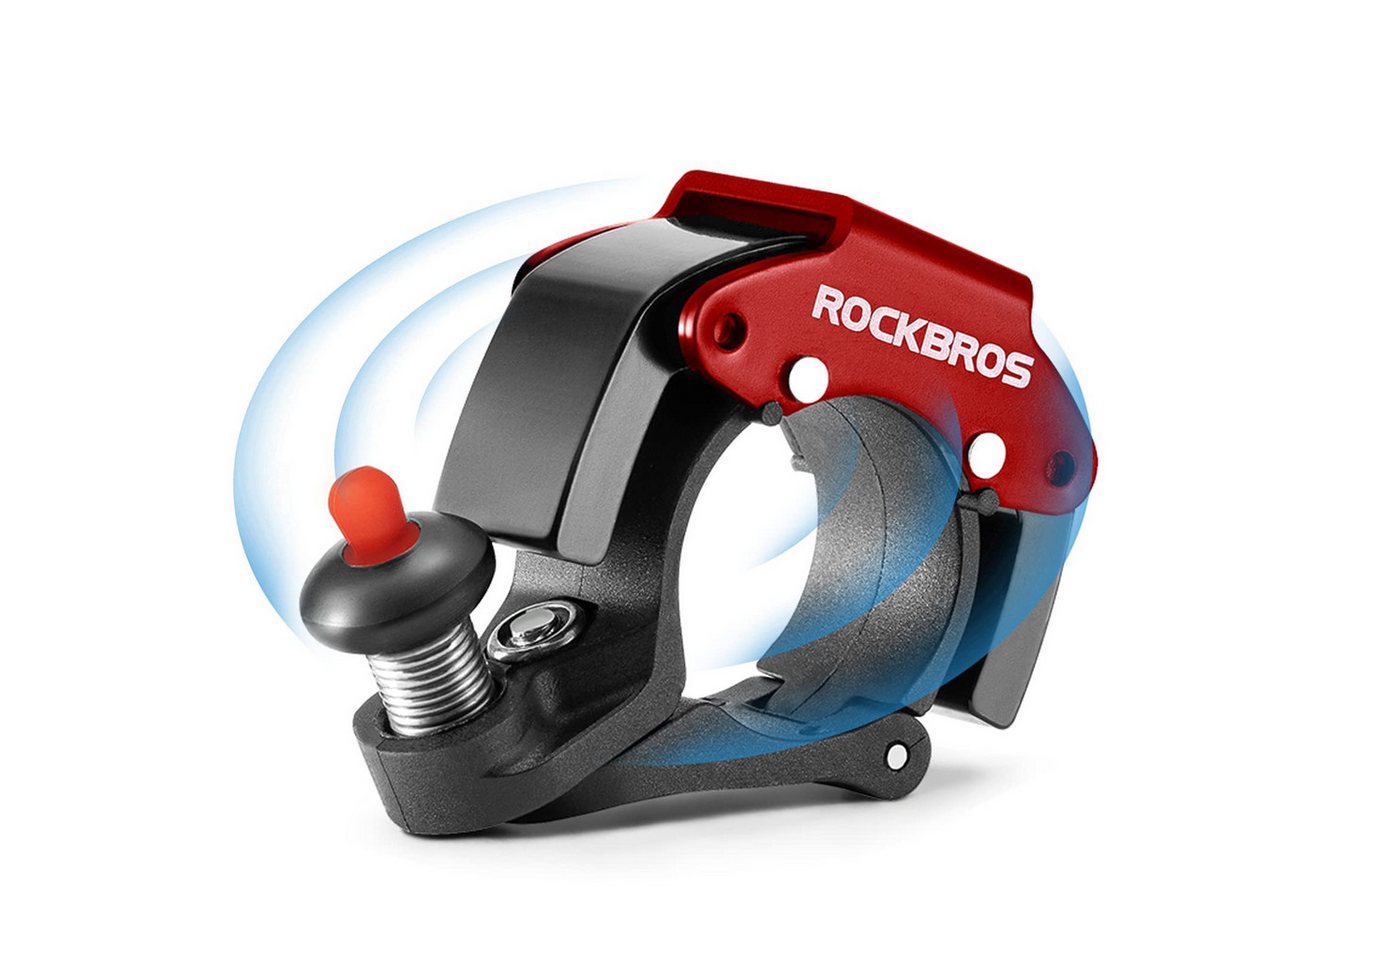 ROCKBROS Fahrradklingel Fahrradklingel, Fahrradglocke, 100dB Laut, (Innovativ Aluminiumlegierung Glocke, 1-tlg. Mini Fahrrad Klingel) für Fahrrad Mountainbike Rennrad mit 22,2 mm Lenker von ROCKBROS